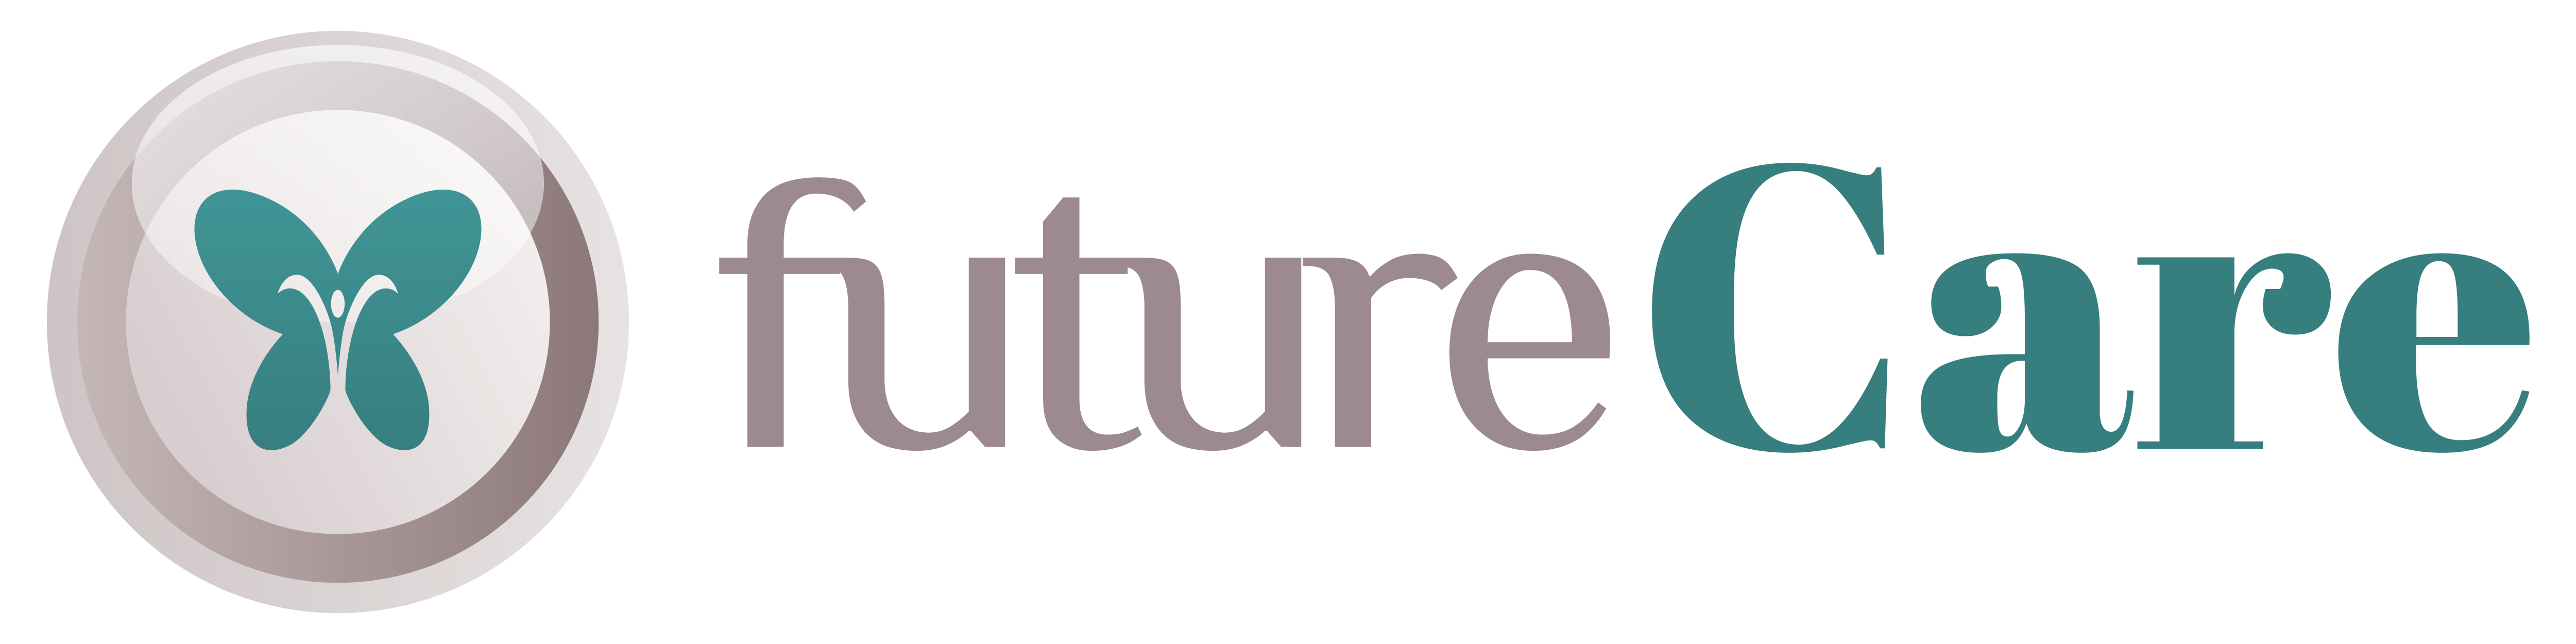 FutureCare Solutions Group Logo